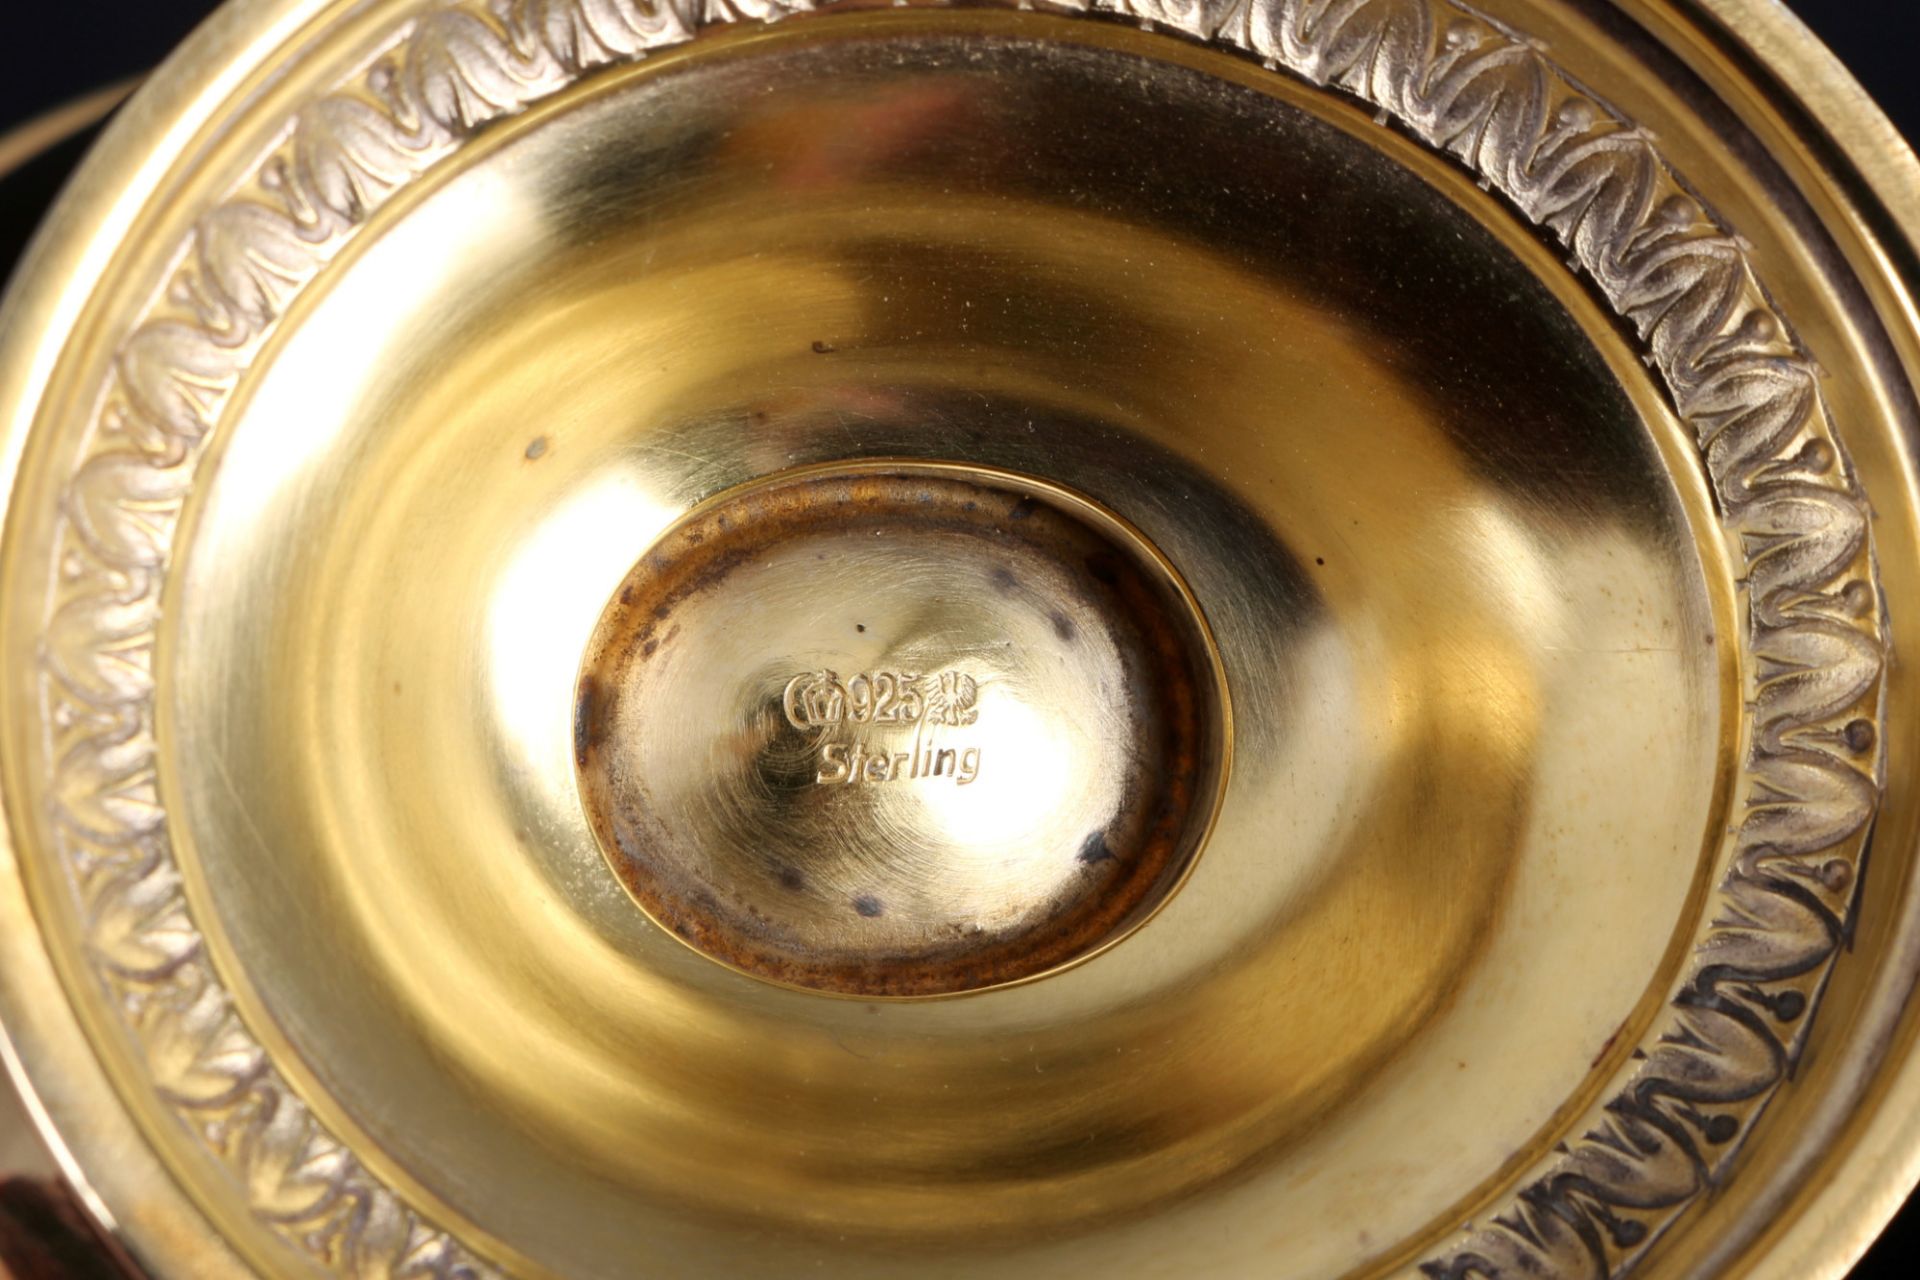 Bruckmann 925 sterling silver 5-piece coffee tea set, gilded, Silber Kaffee- & Teekern, - Image 7 of 7